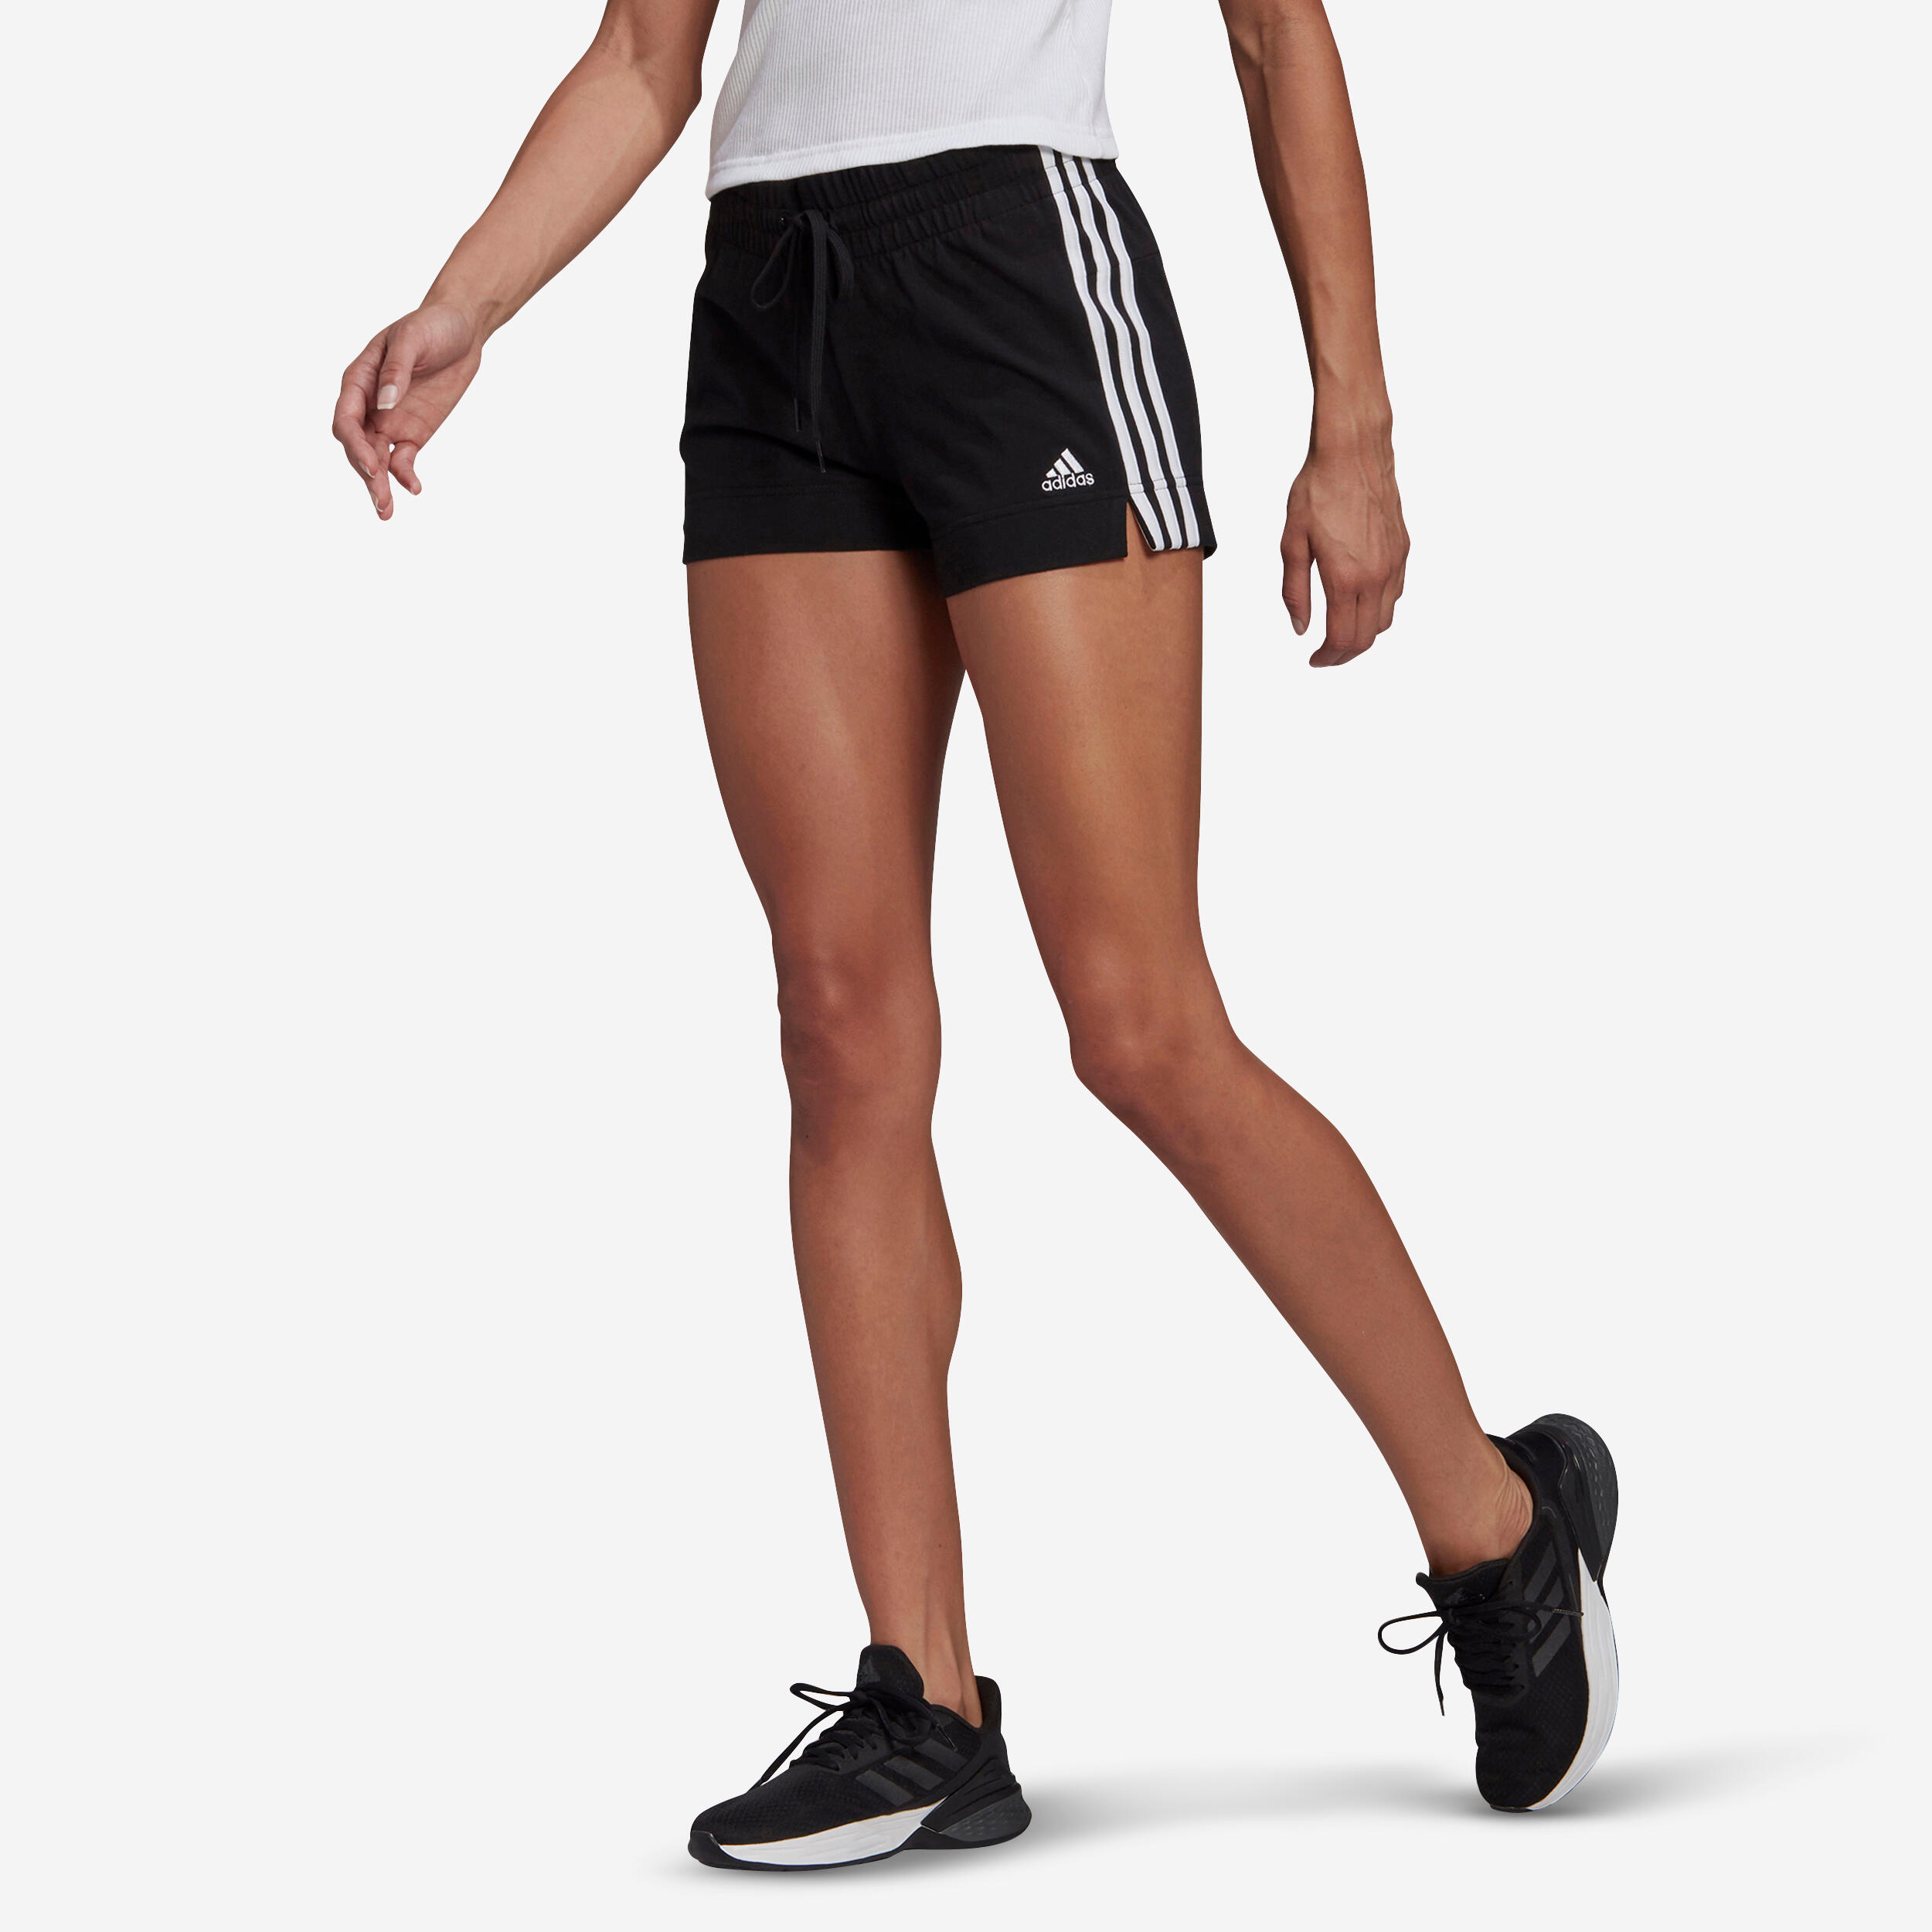 Decathlon | Pantaloncini donna fitness ADIDAS 3 stripes cotone neri-bianchi |  Adidas